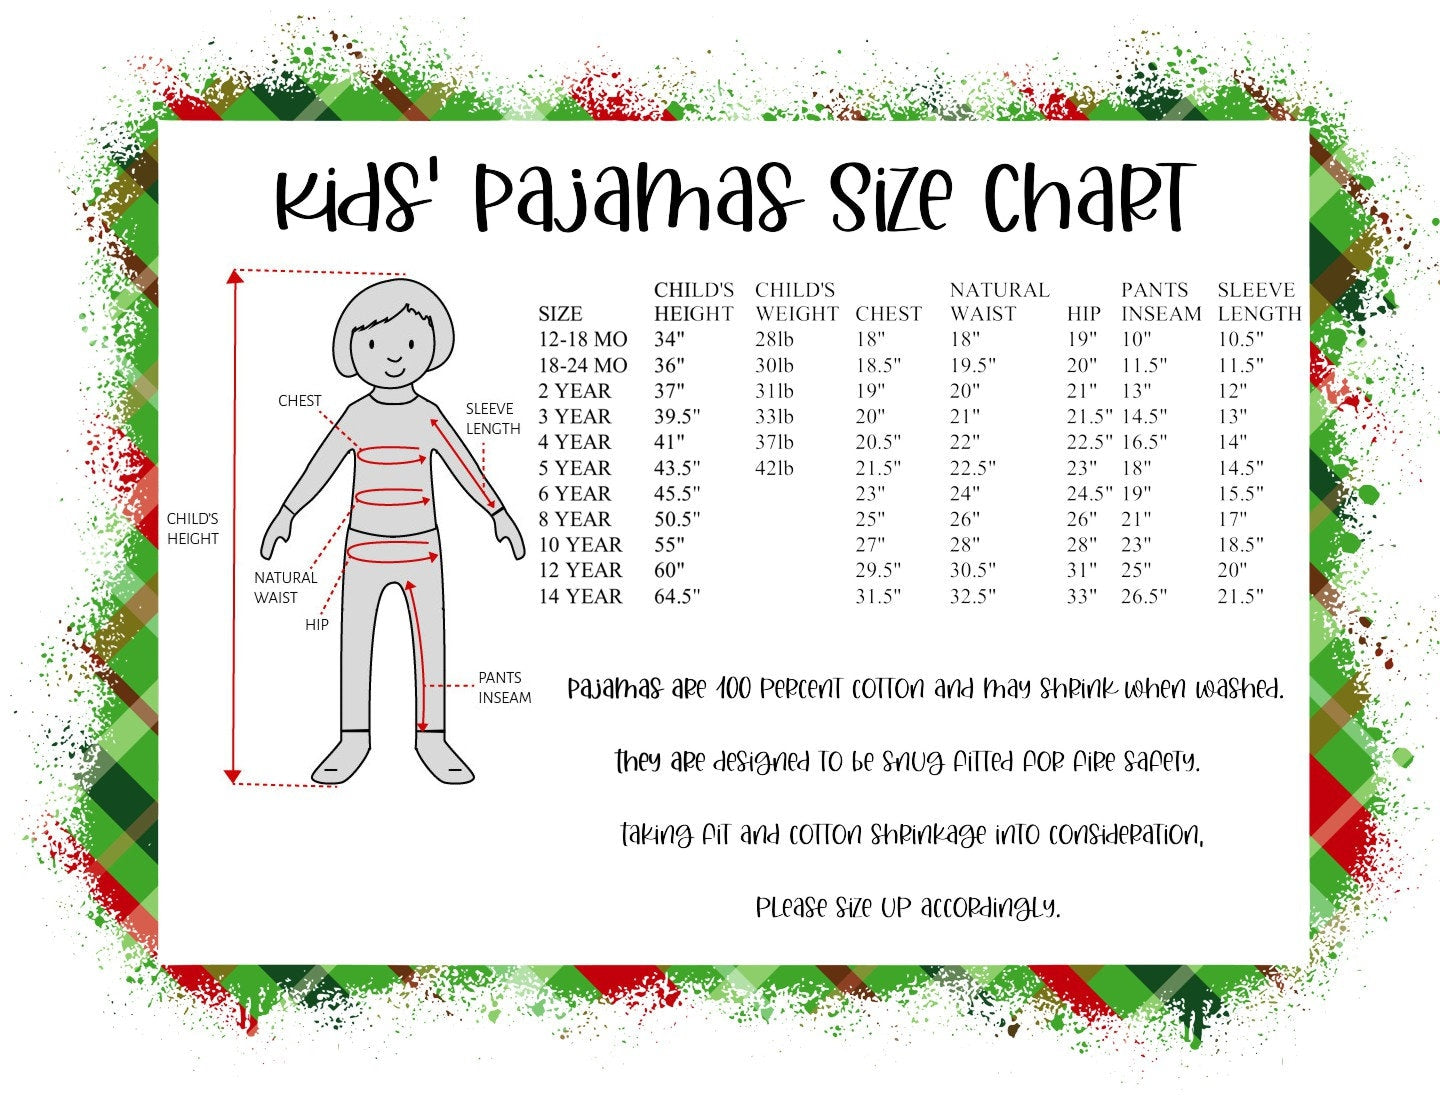 Will Trade Family for Presents Christmas Pajamas - matching christmas pjs -  women's christmas jammies - matching family christmas pajamas